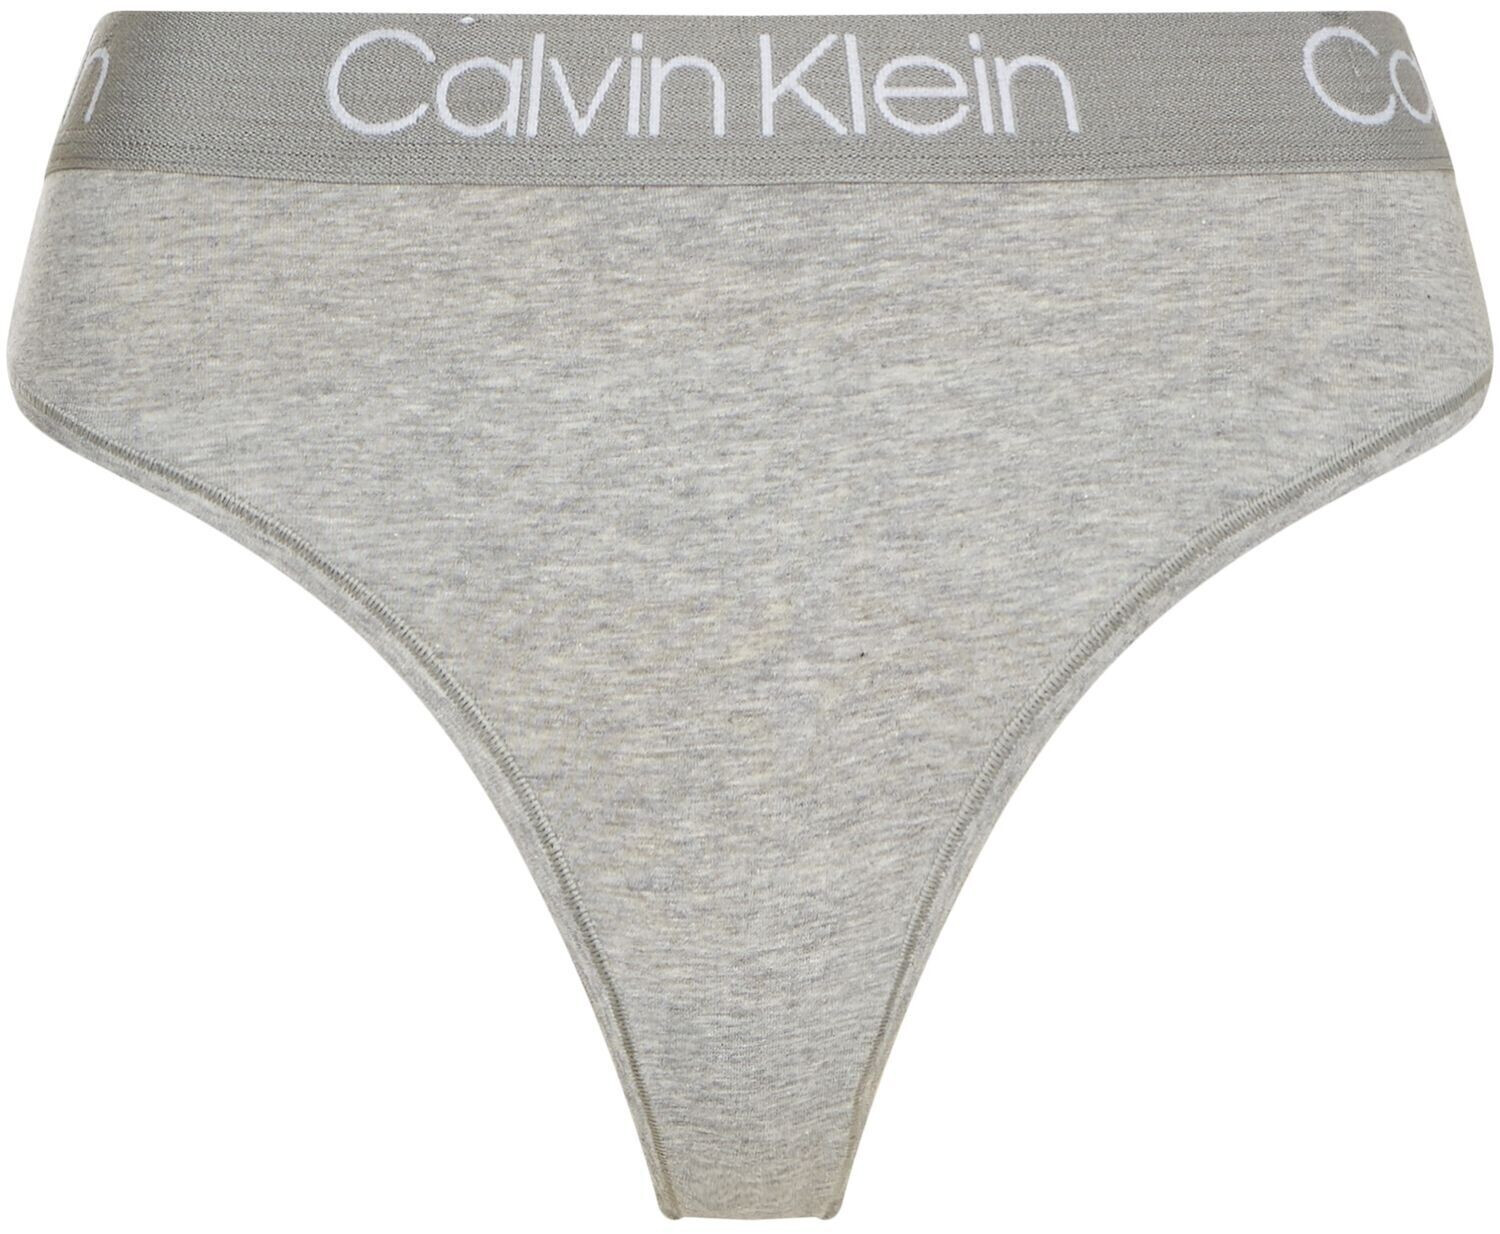 Calvin Klein Thong 3 Pack - Multi